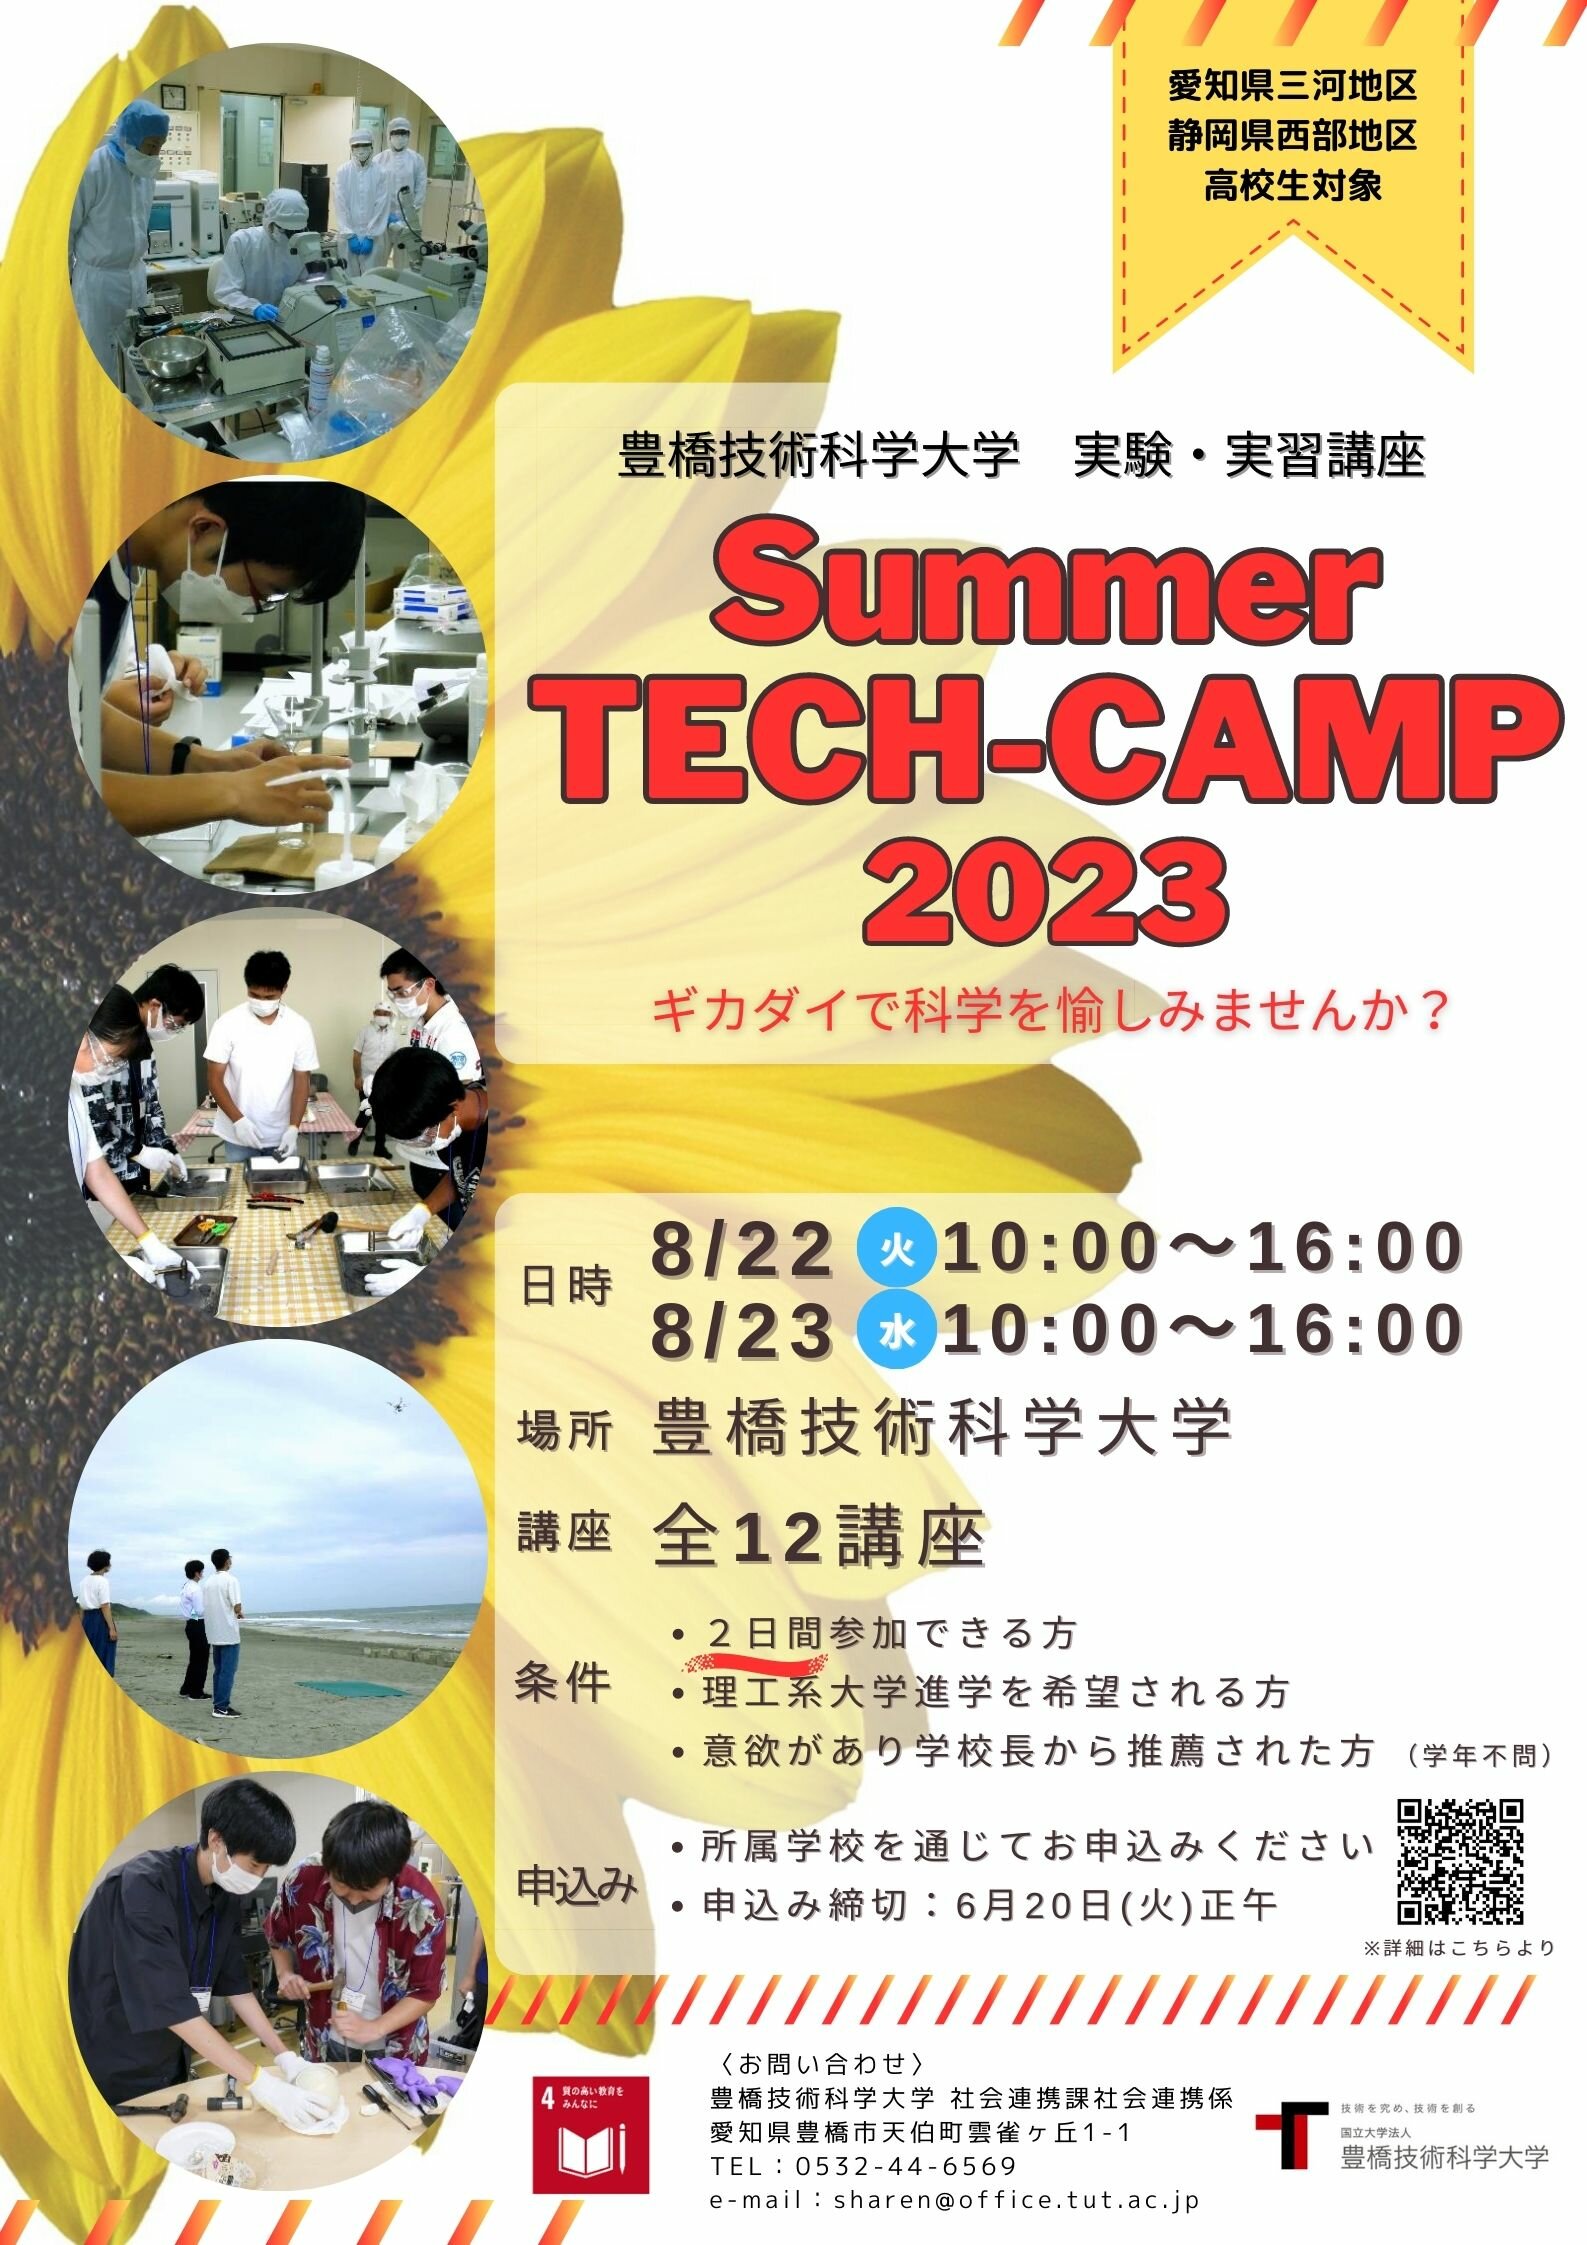 https://www.sharen.tut.ac.jp/event/mt_imgs/flyer.jpg